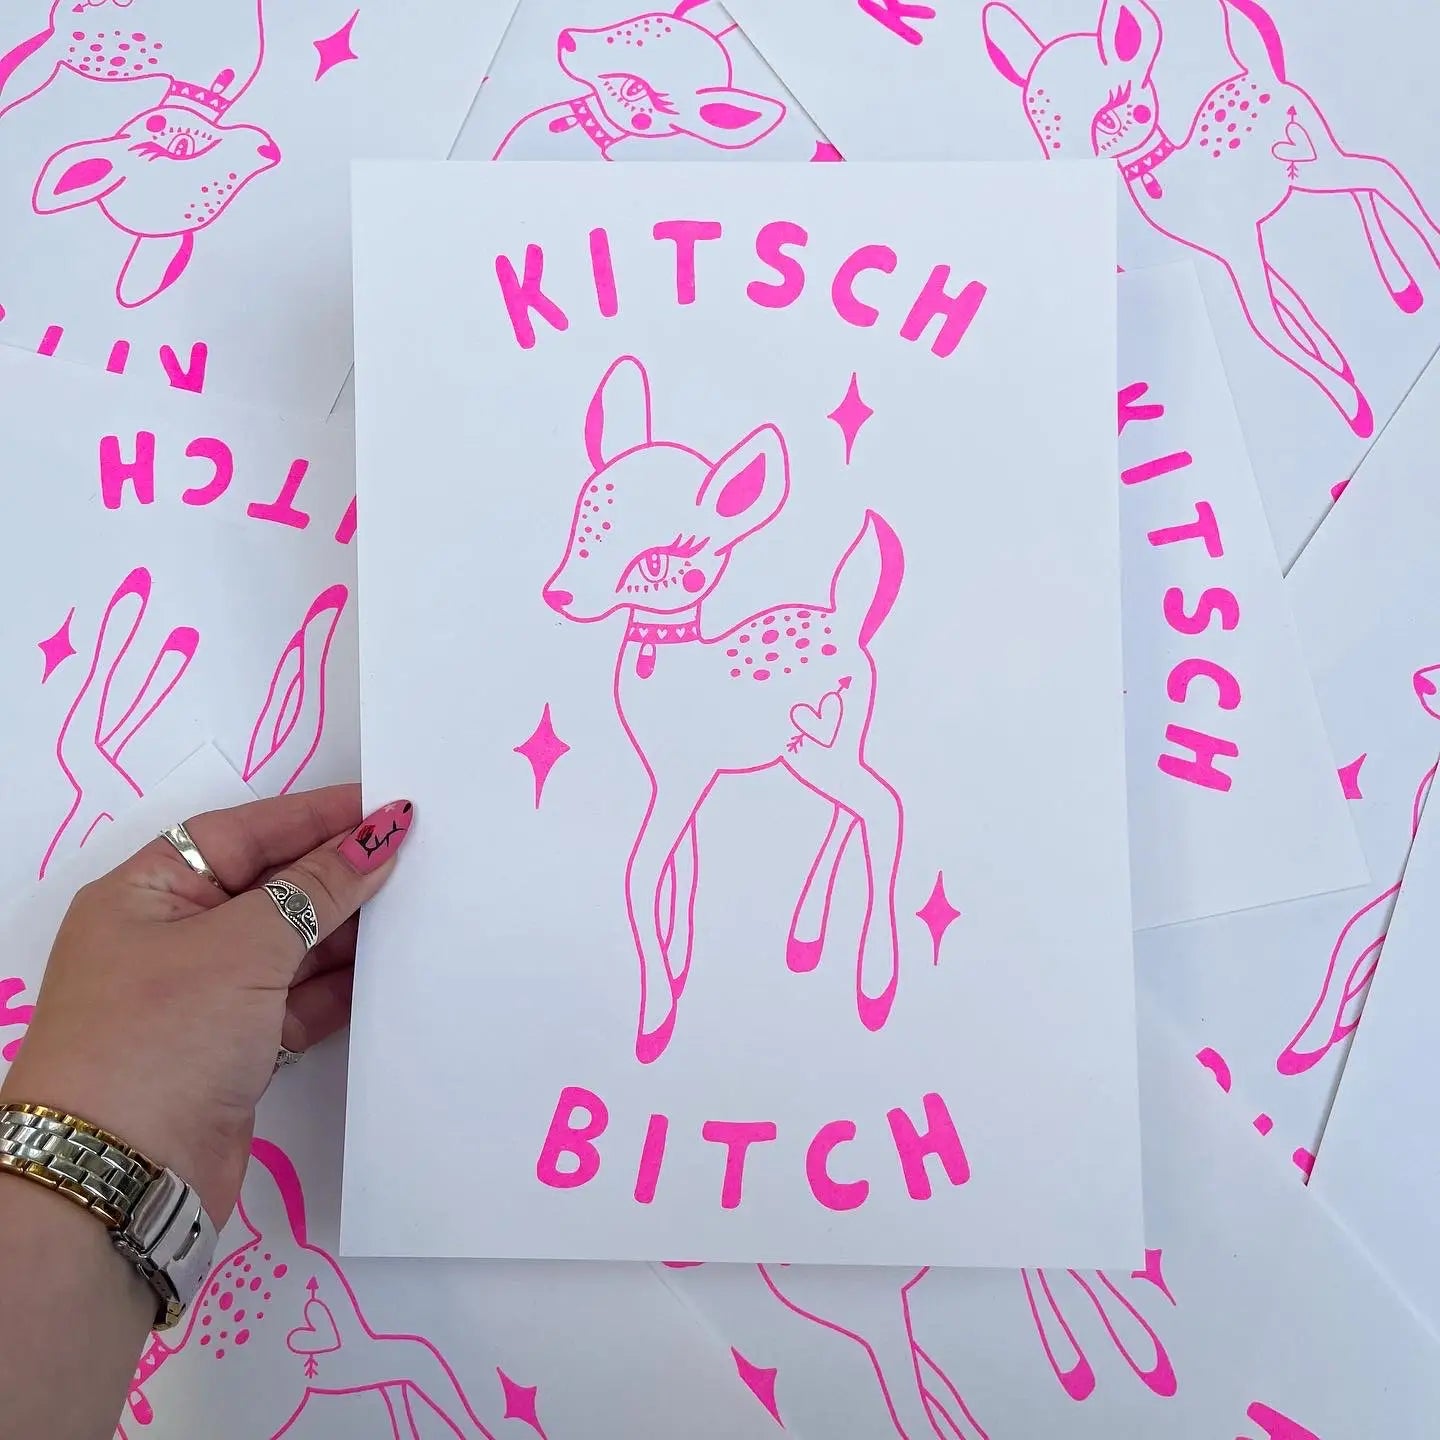 handmade print of Kitsch Bitch by Amy Hastings, cute deer in neon pink